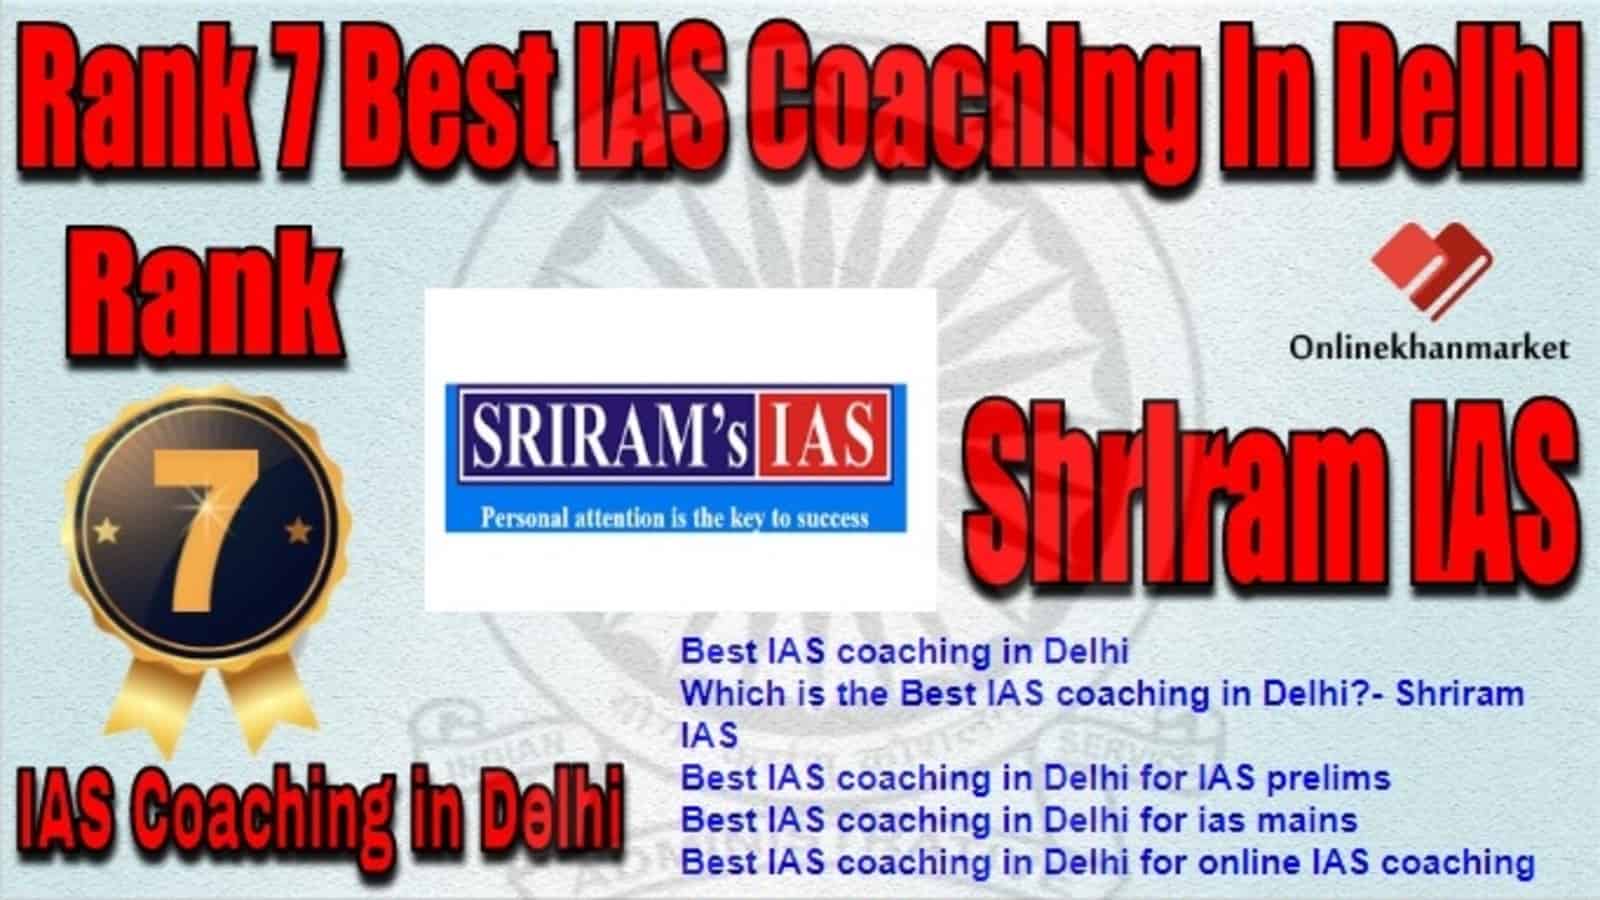 Rank 7 Best IAS Coaching in Delhi